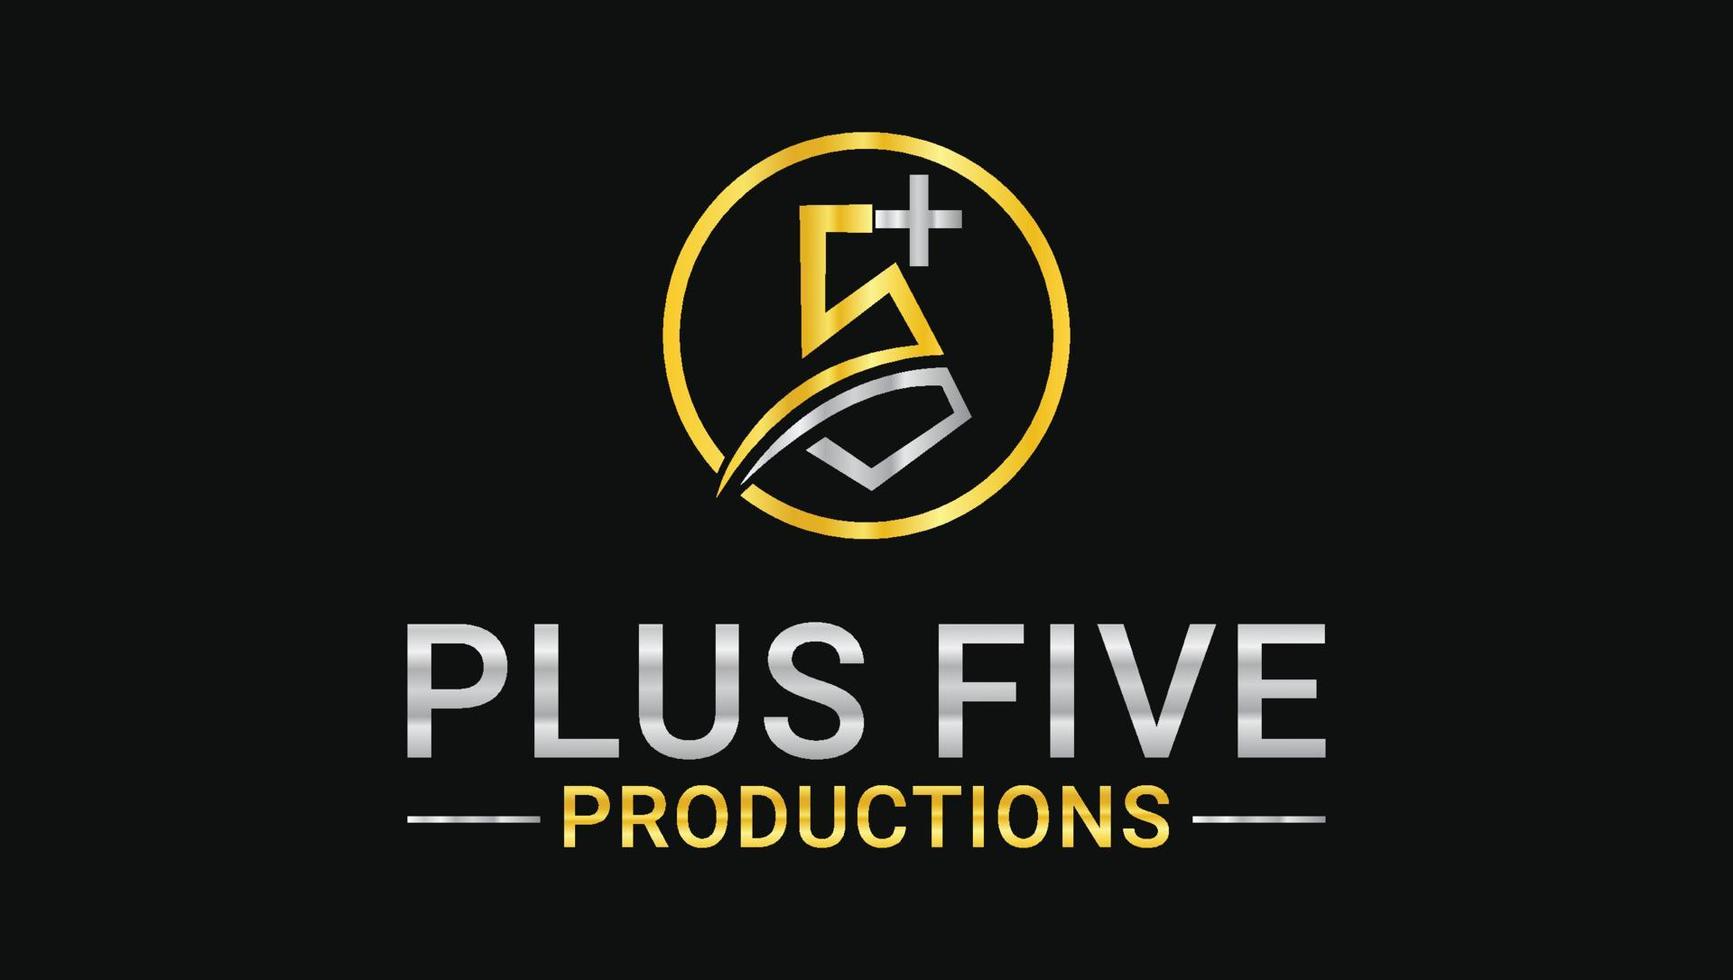 Creative P5 Plus or Plus Five Productions Monogram Logo Design Template vector